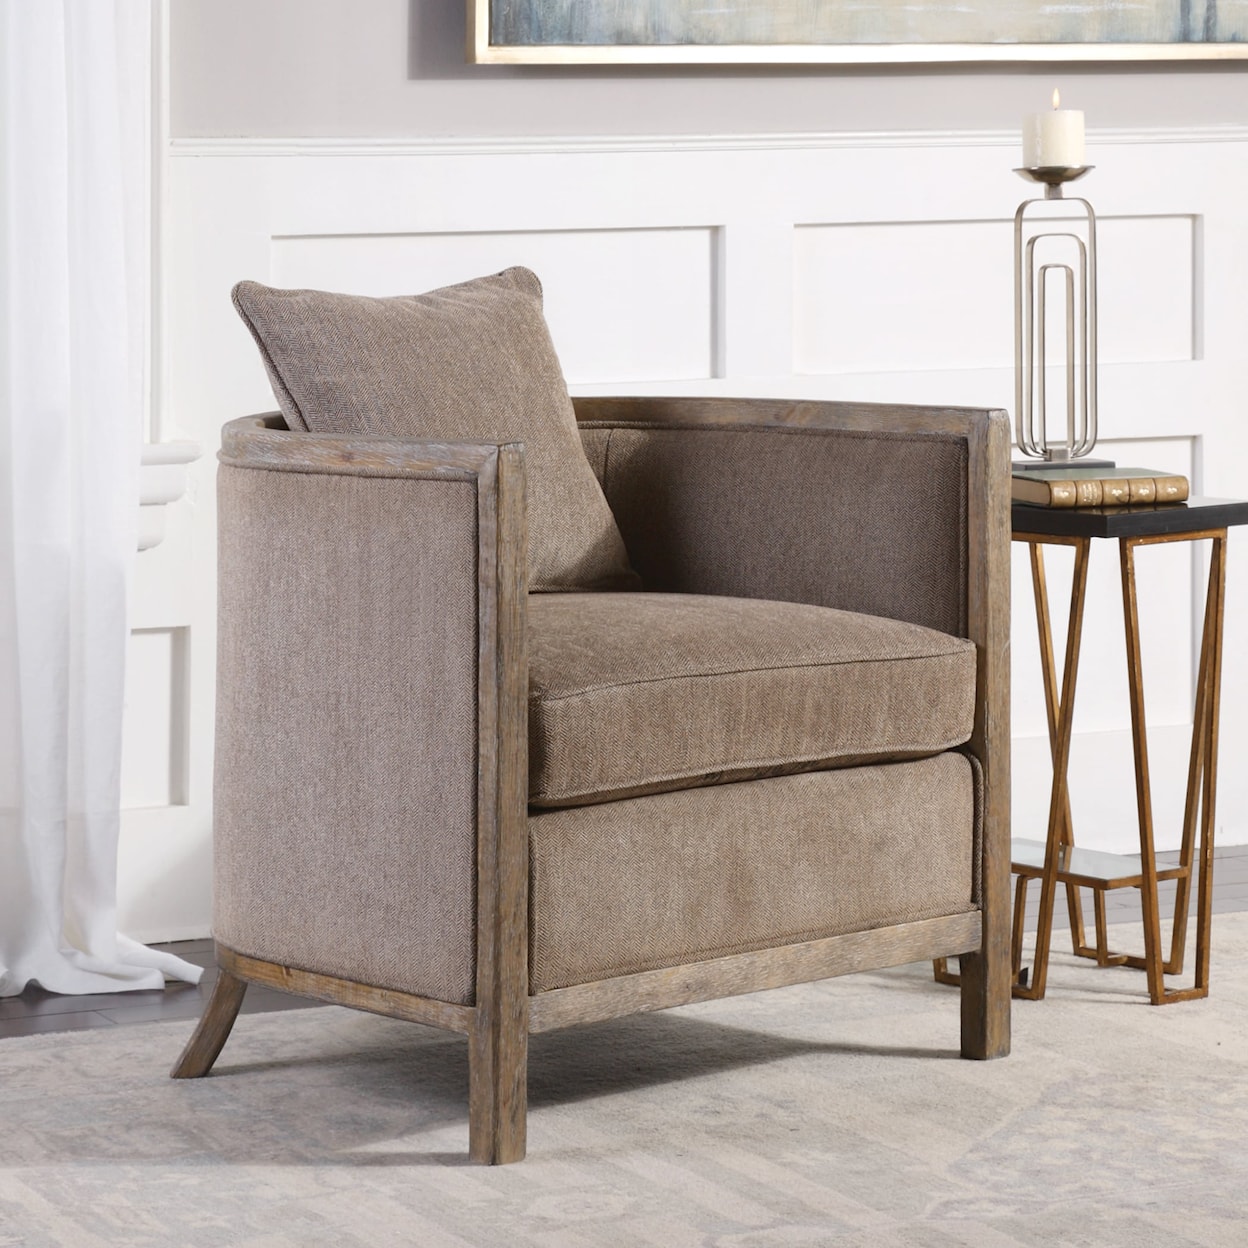 Uttermost Accent Furniture - Accent Chairs Viaggio Gray Chenille Accent Chair